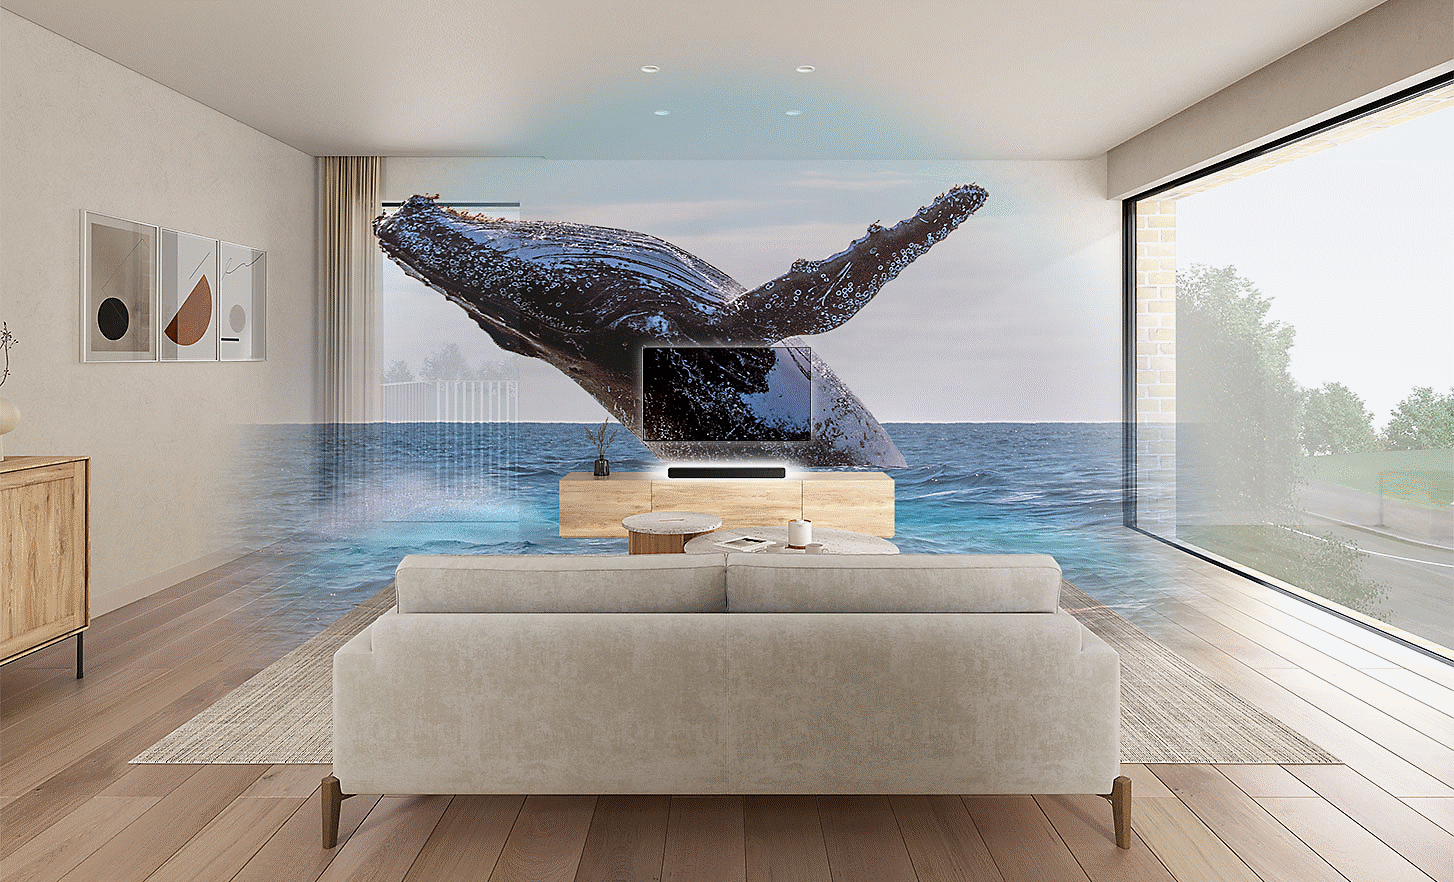 Gambar ruang tamu dengan TV dan soundbar HT-S2000 di tengah, gambar seekor paus dengan tanda air di atasnya